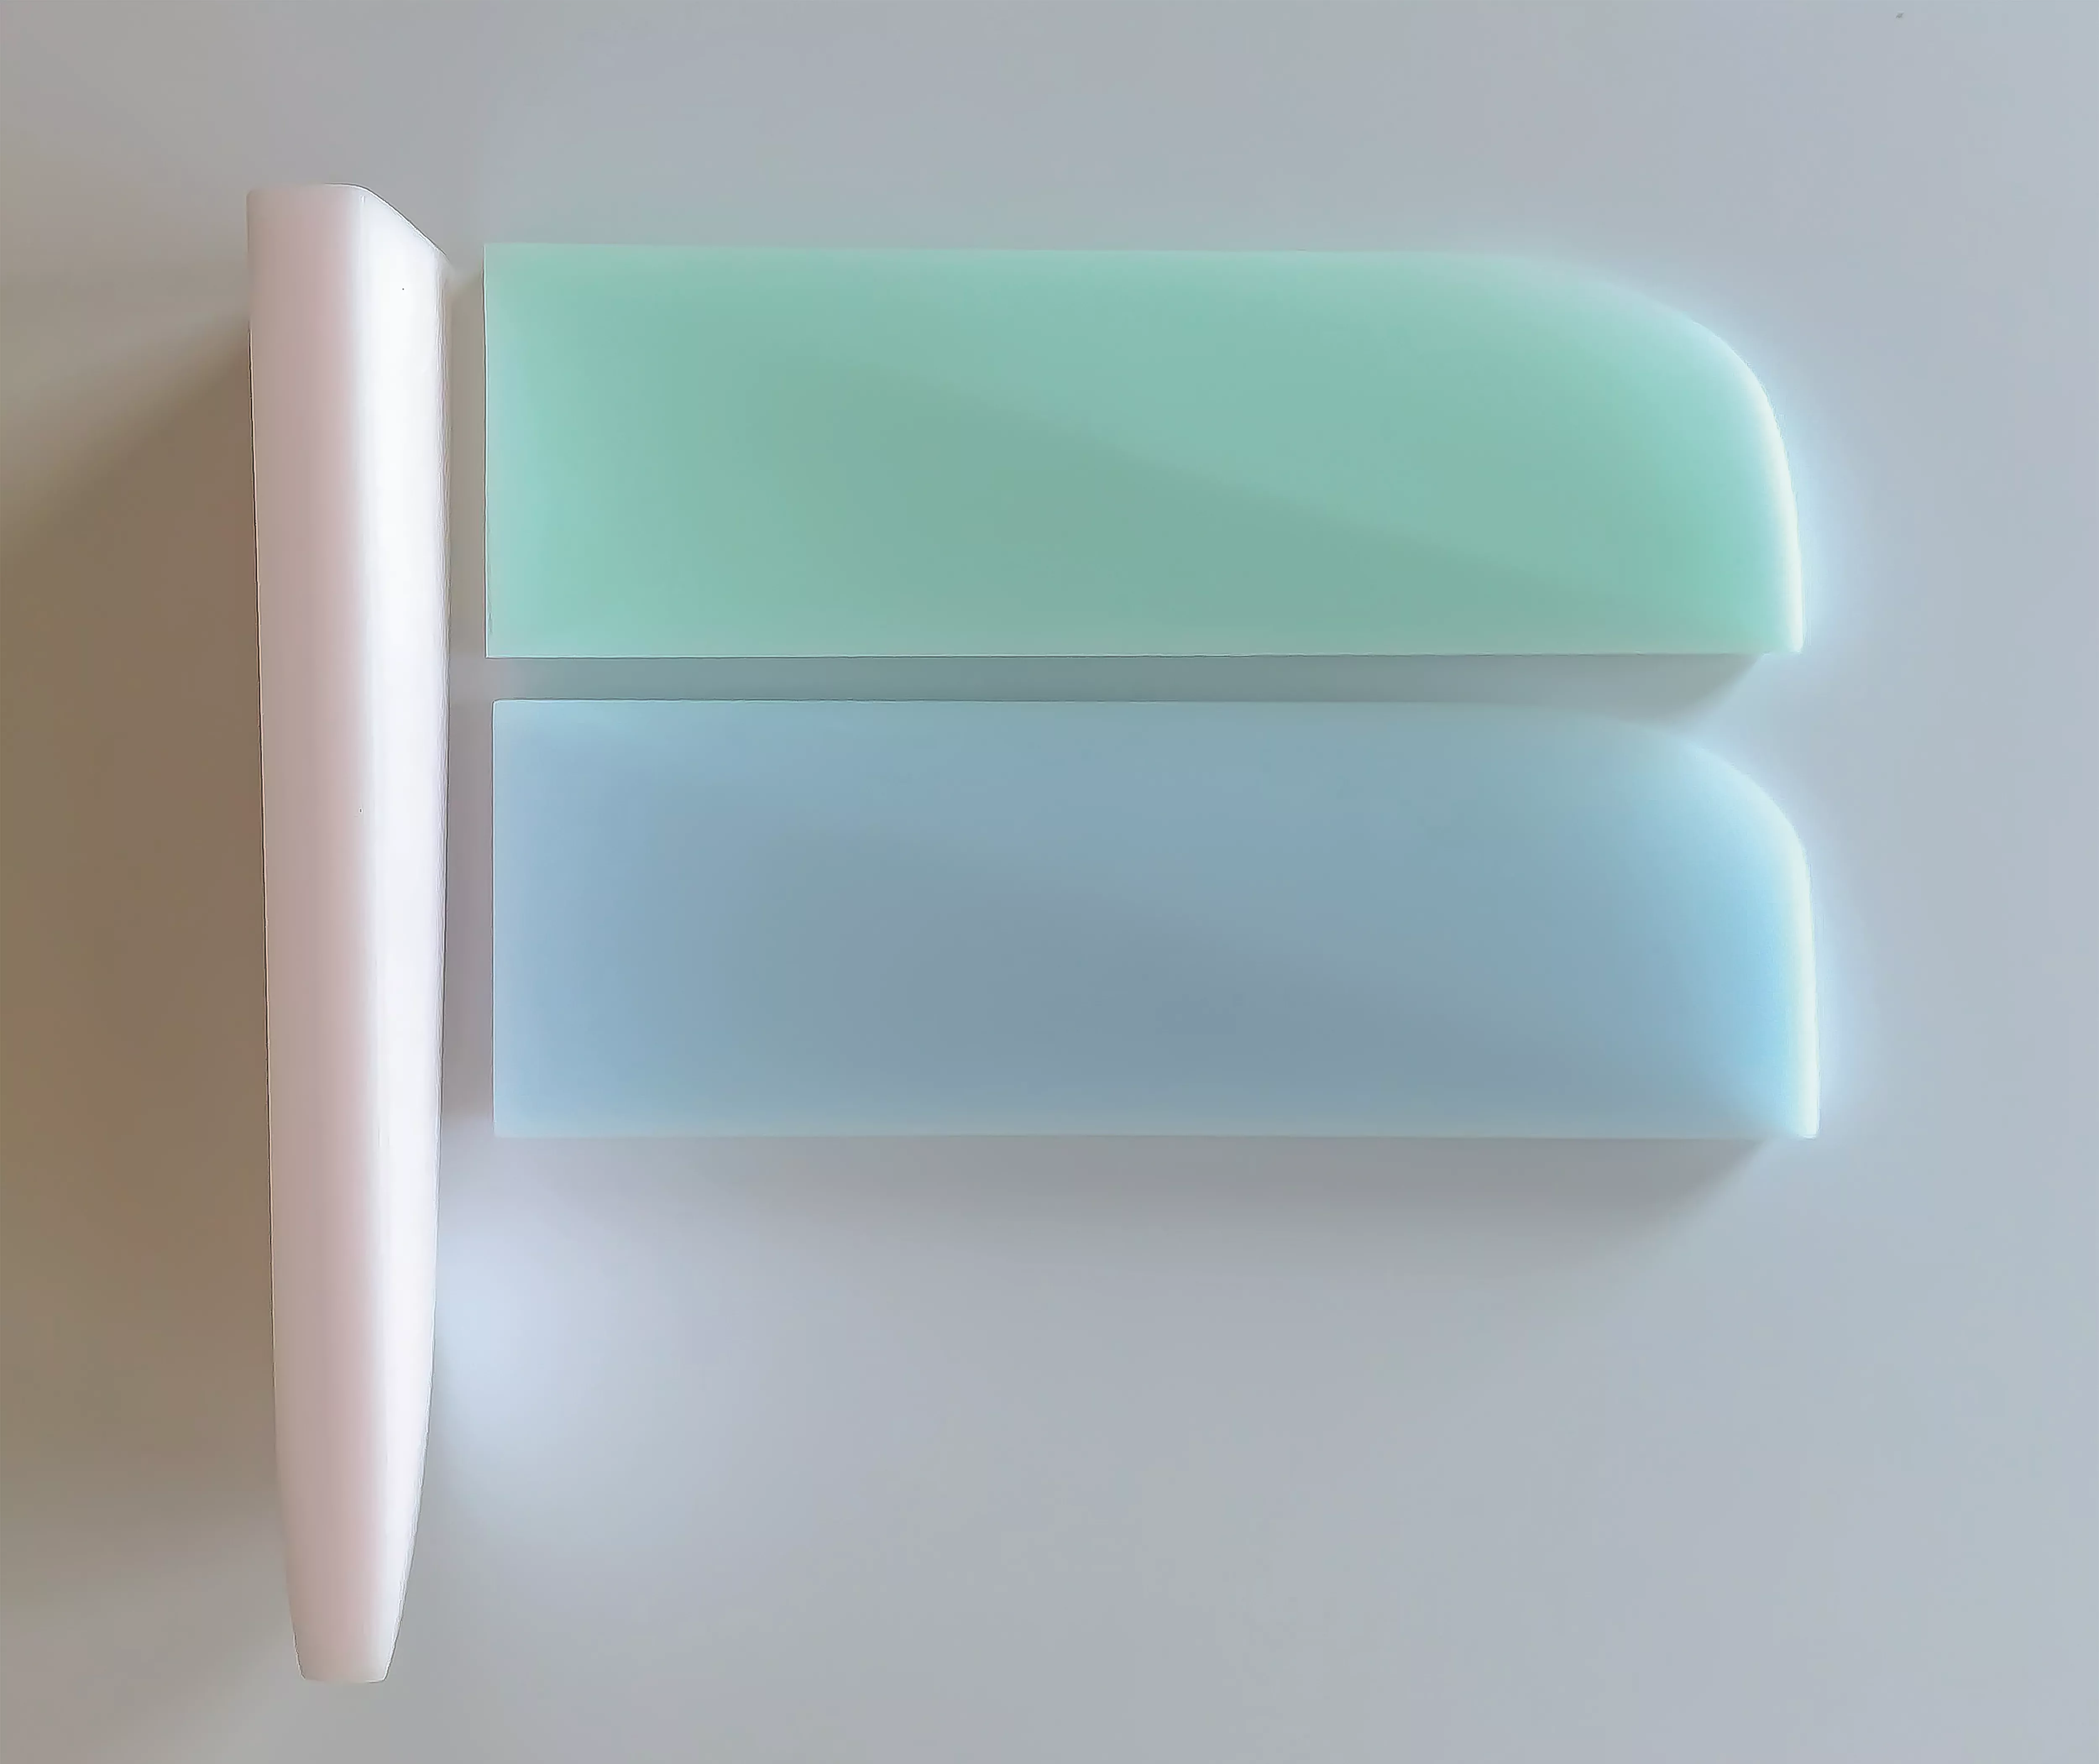 “Seamless in Pastel” by young designer Natascha Van Reeth